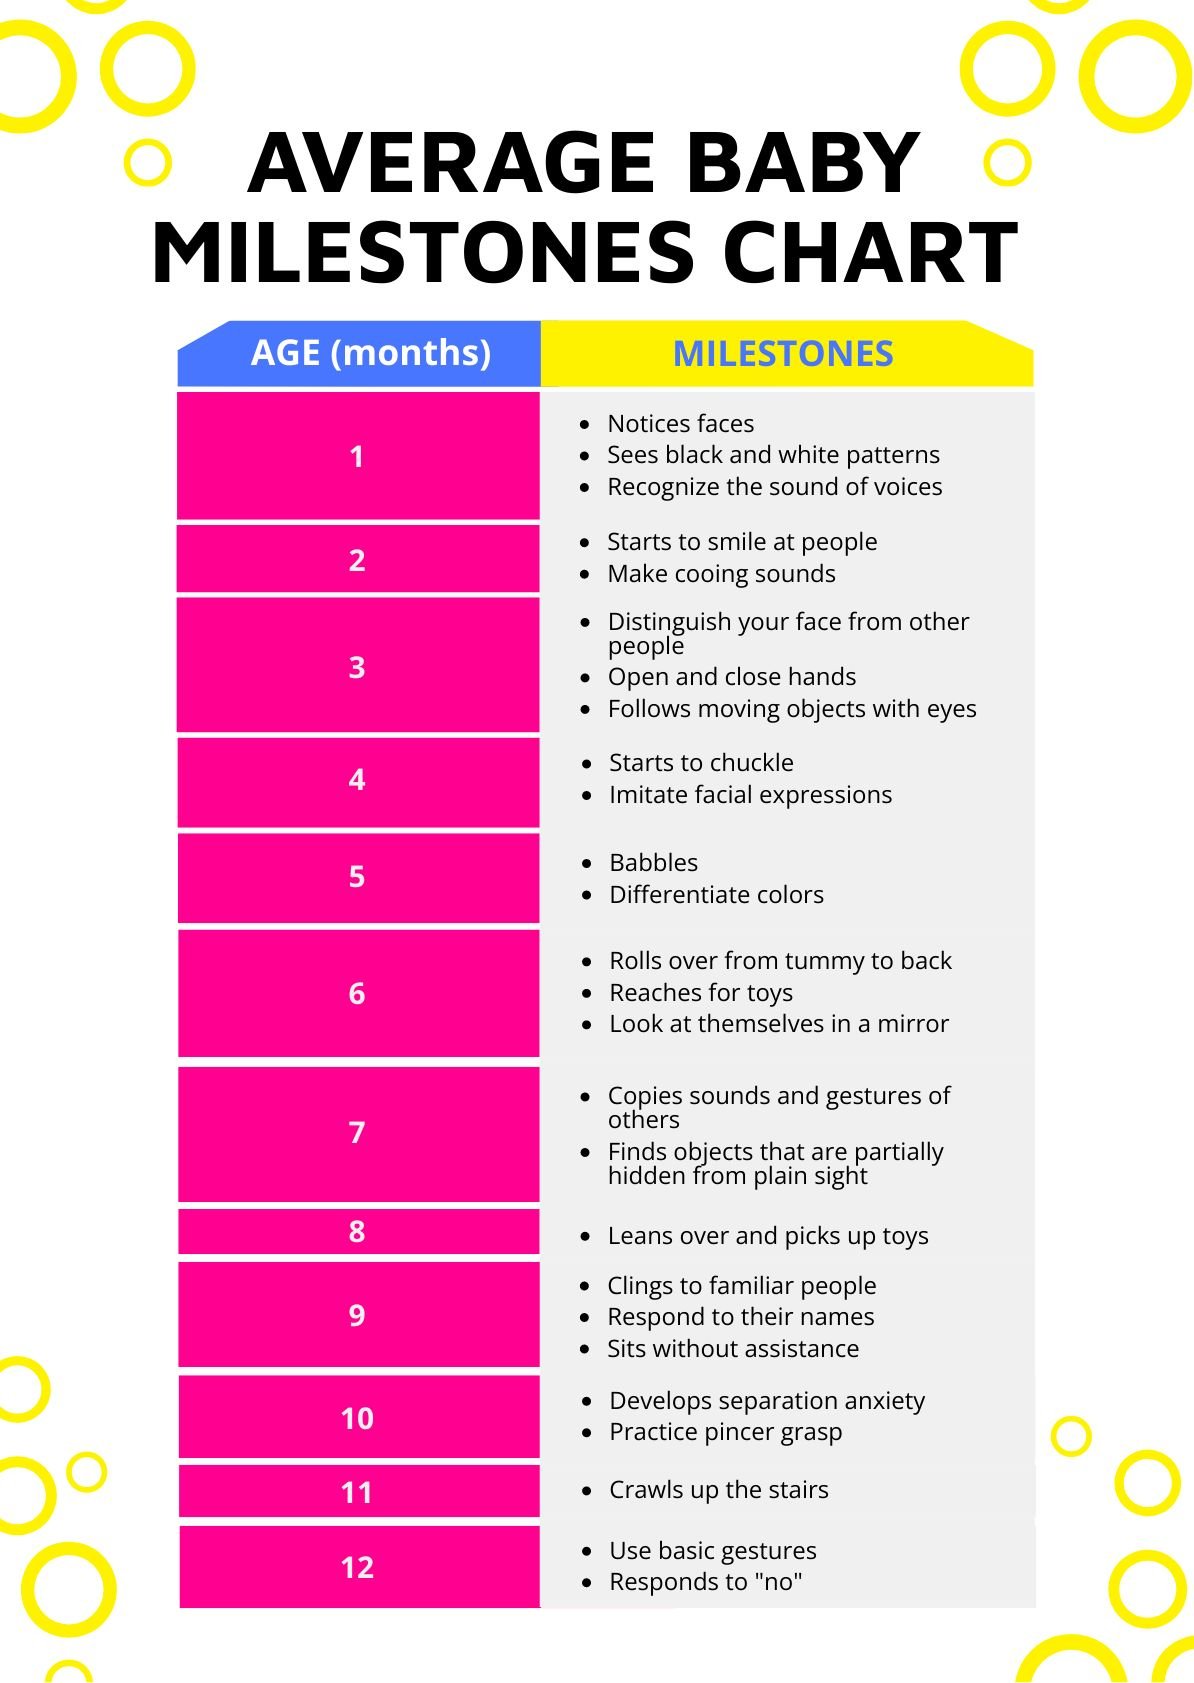 Average Baby Milestones Chart in PDF